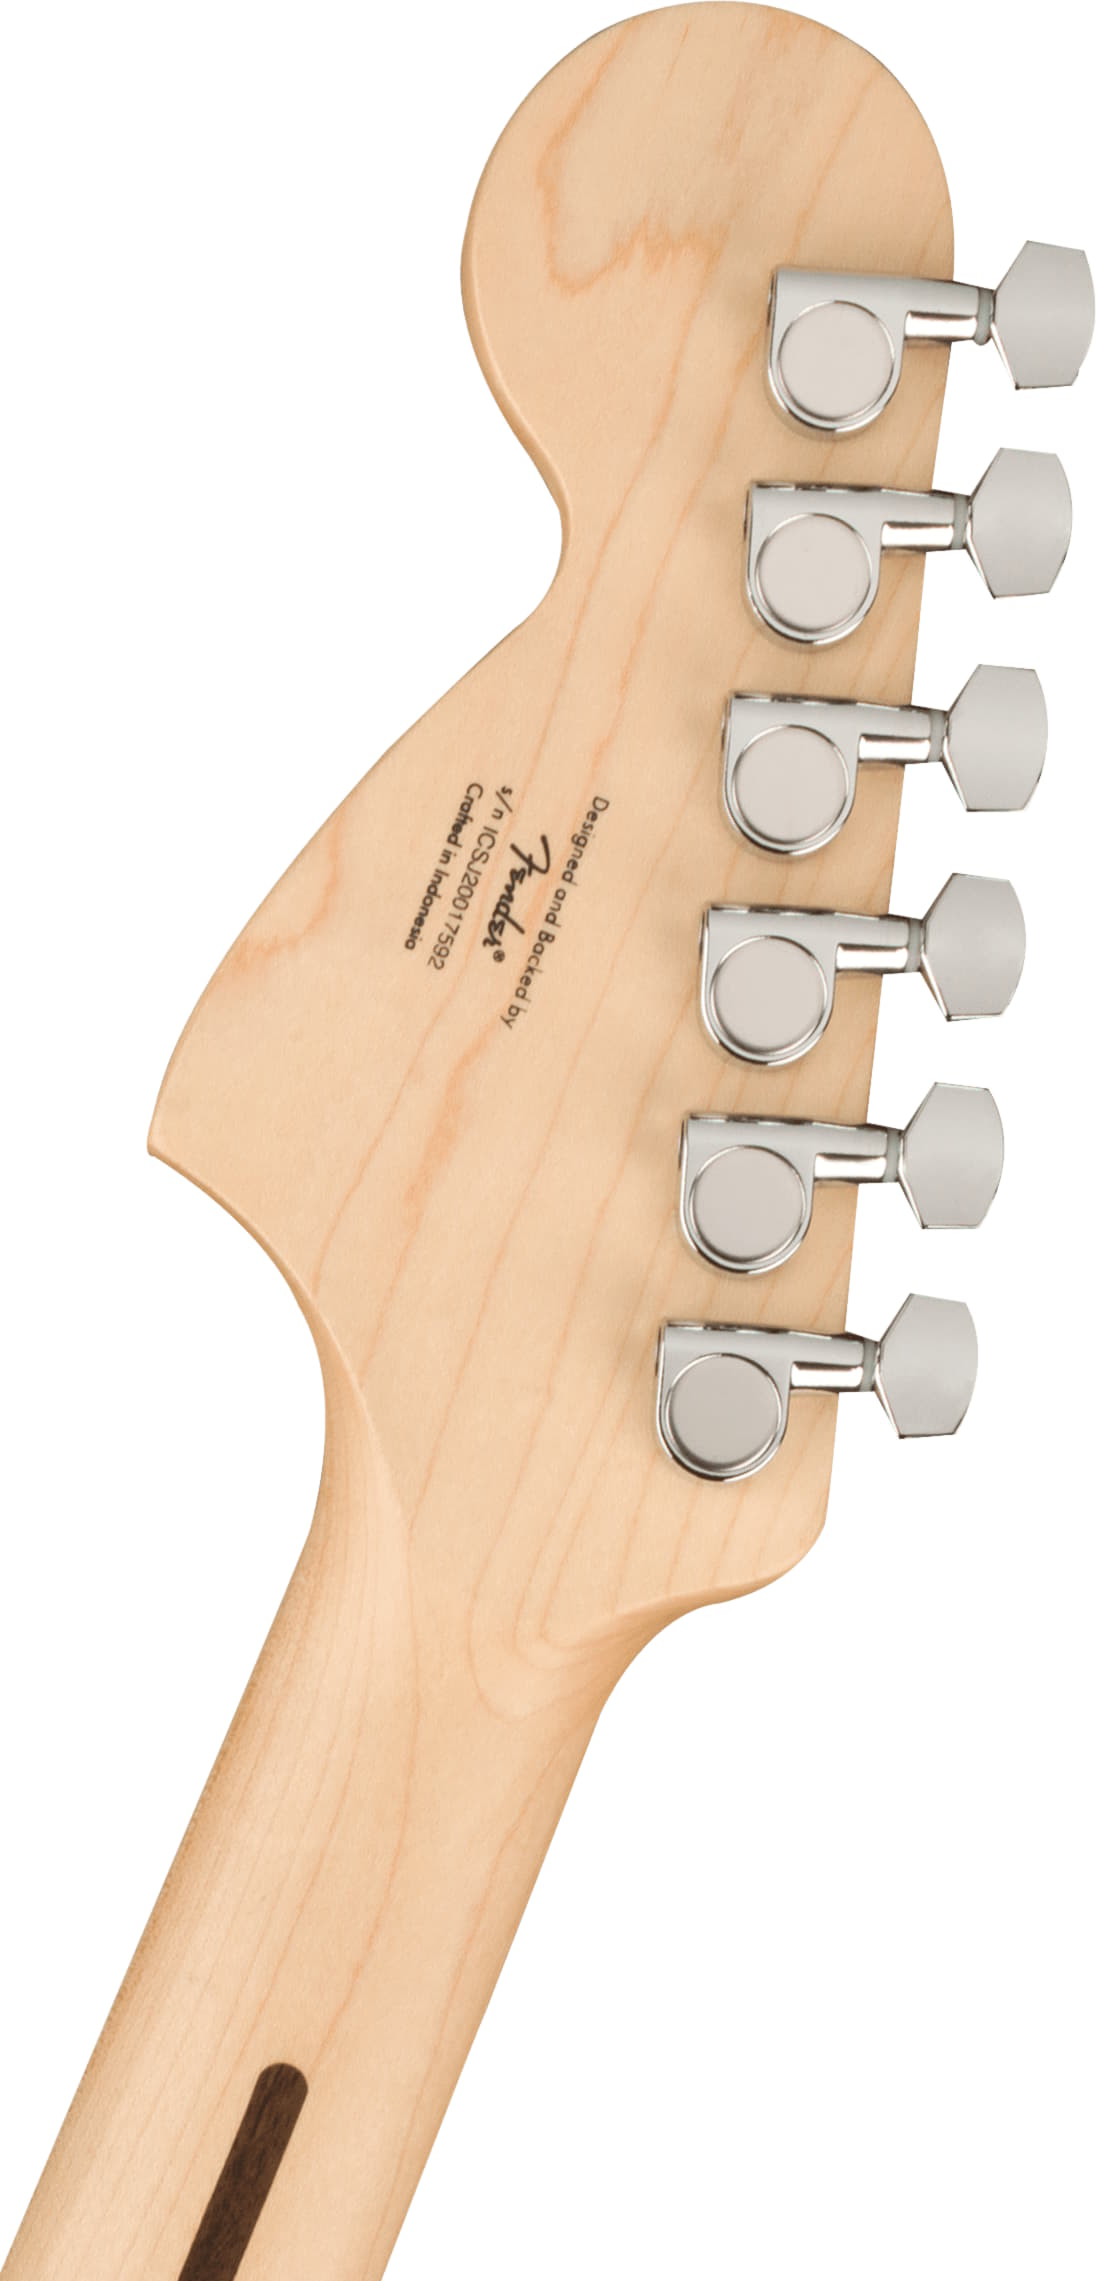 Fender Squier Affinity 2021 Stratocaster FMT HSS MN Sienna Sunburst по цене 49 000 ₽